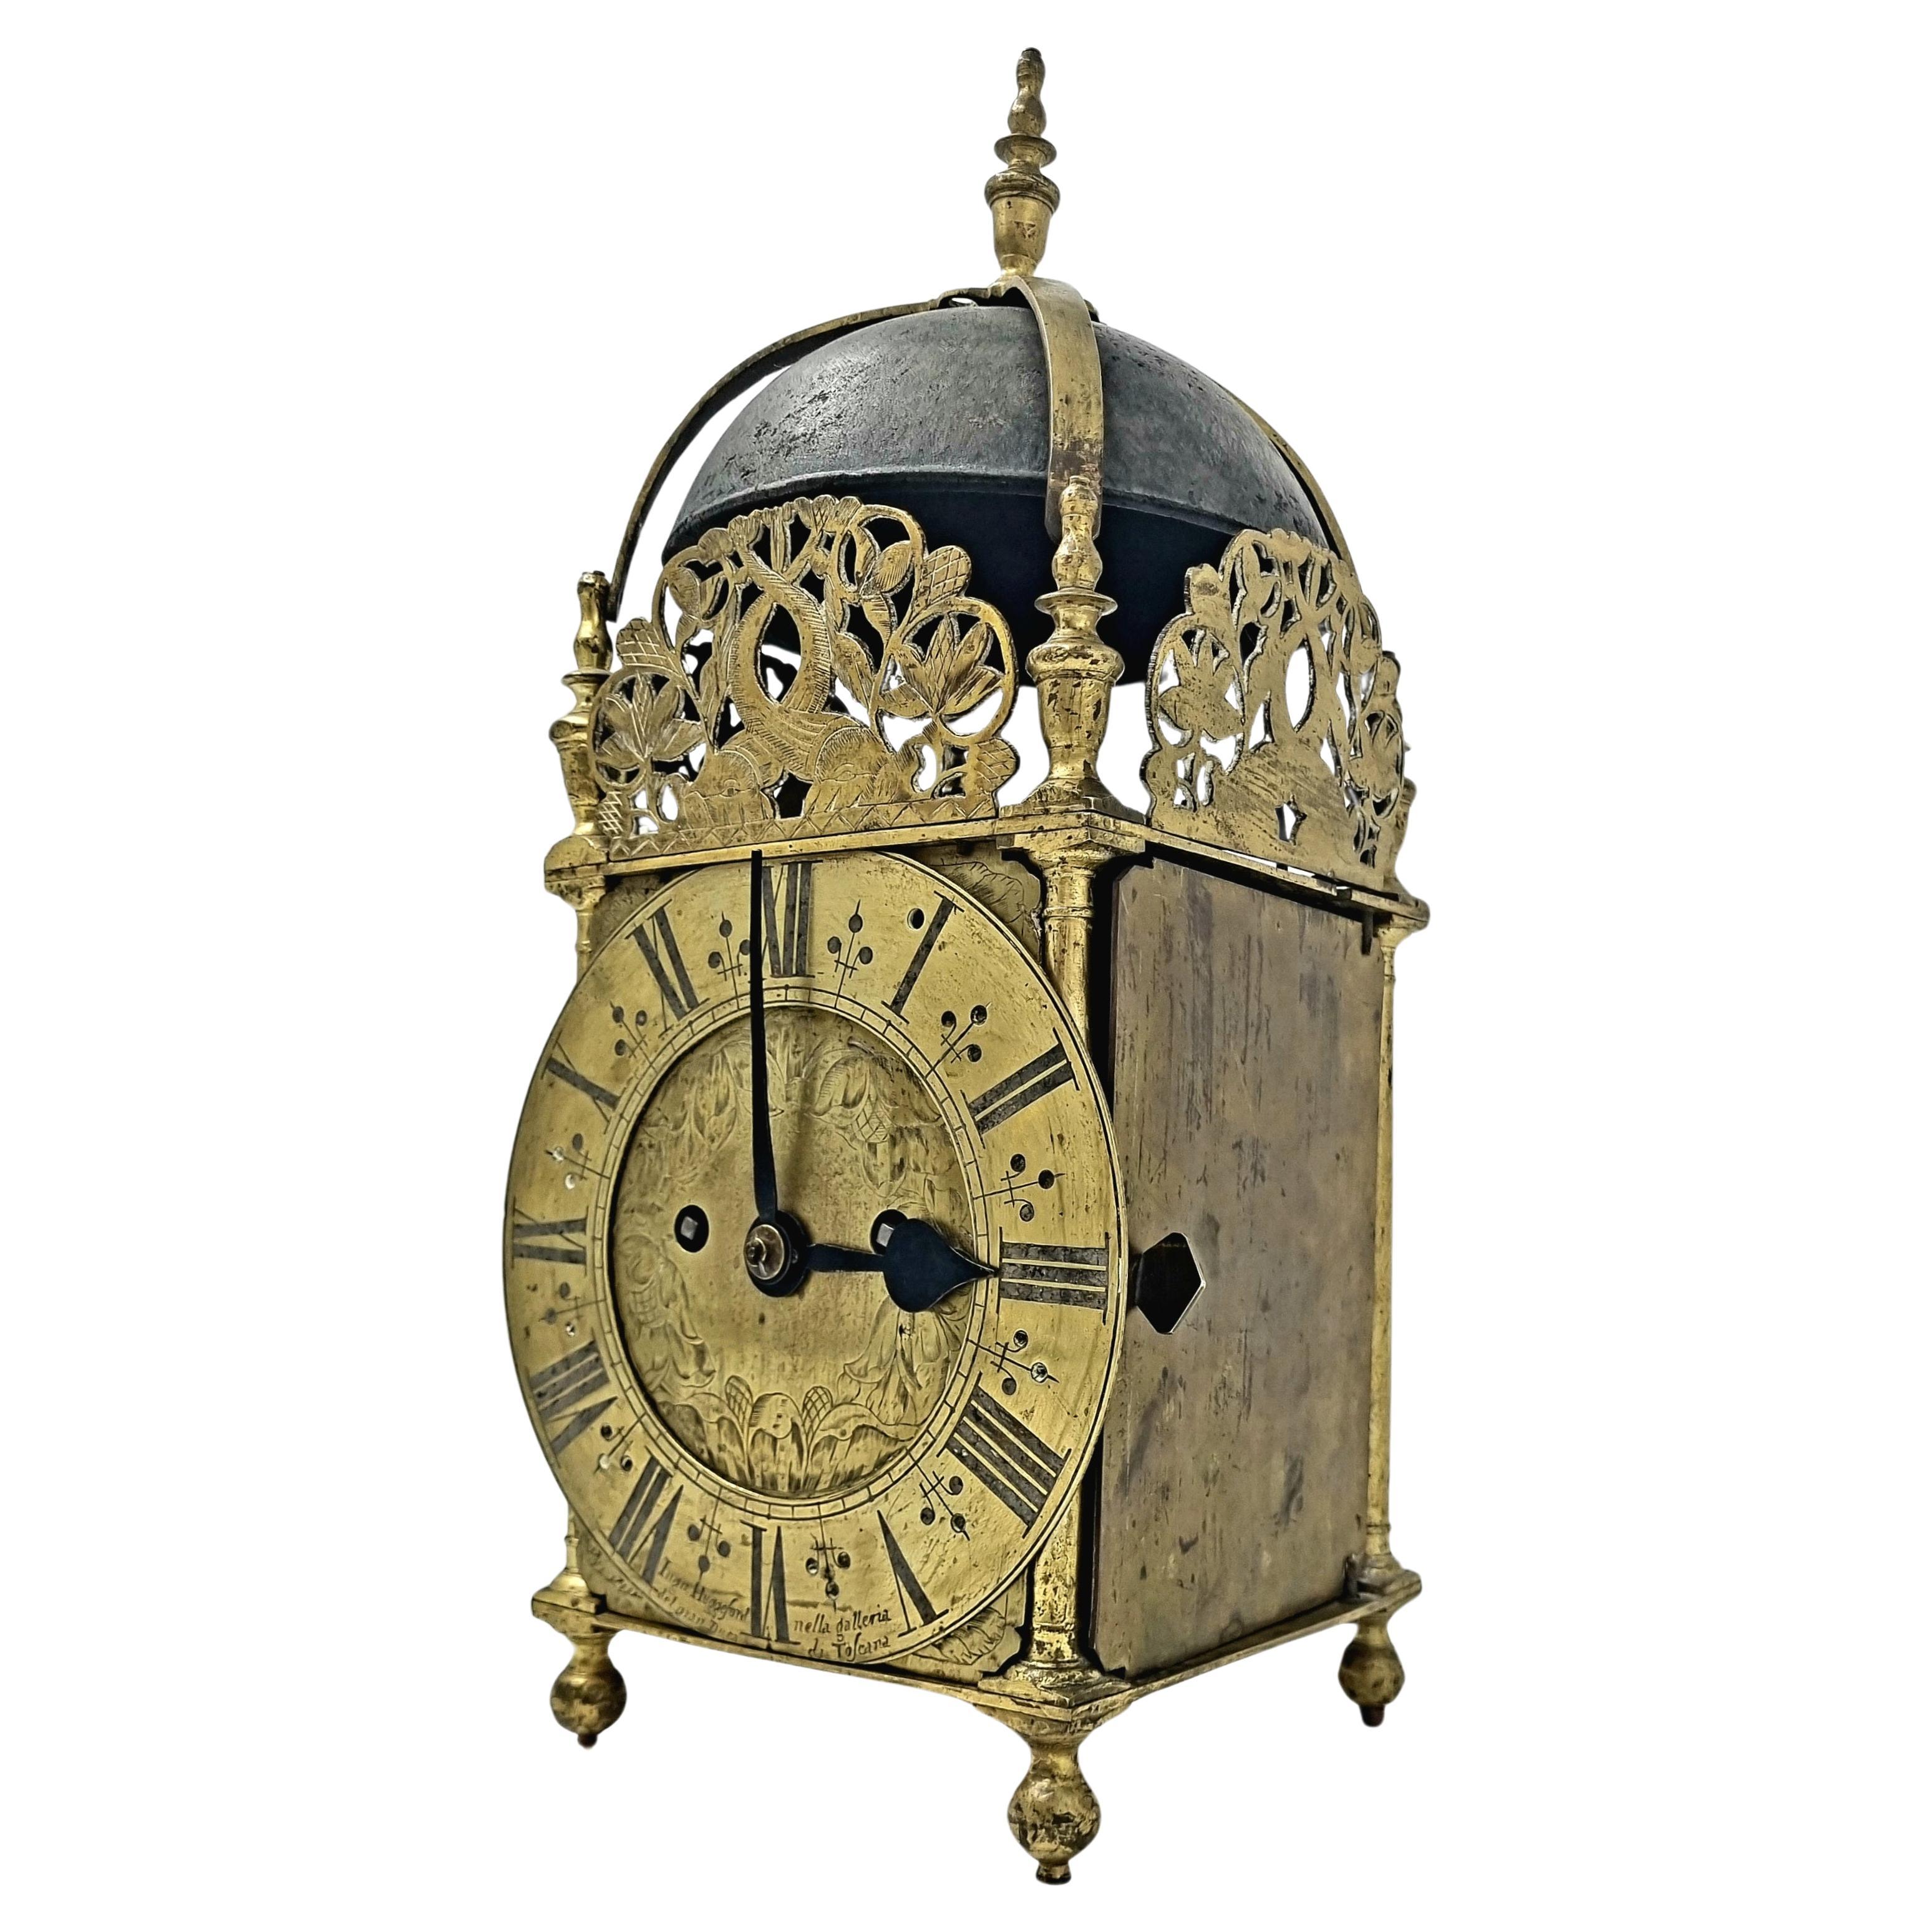 Horloge lanterne anglaise du 17e siècle par Ignatius Huggeford